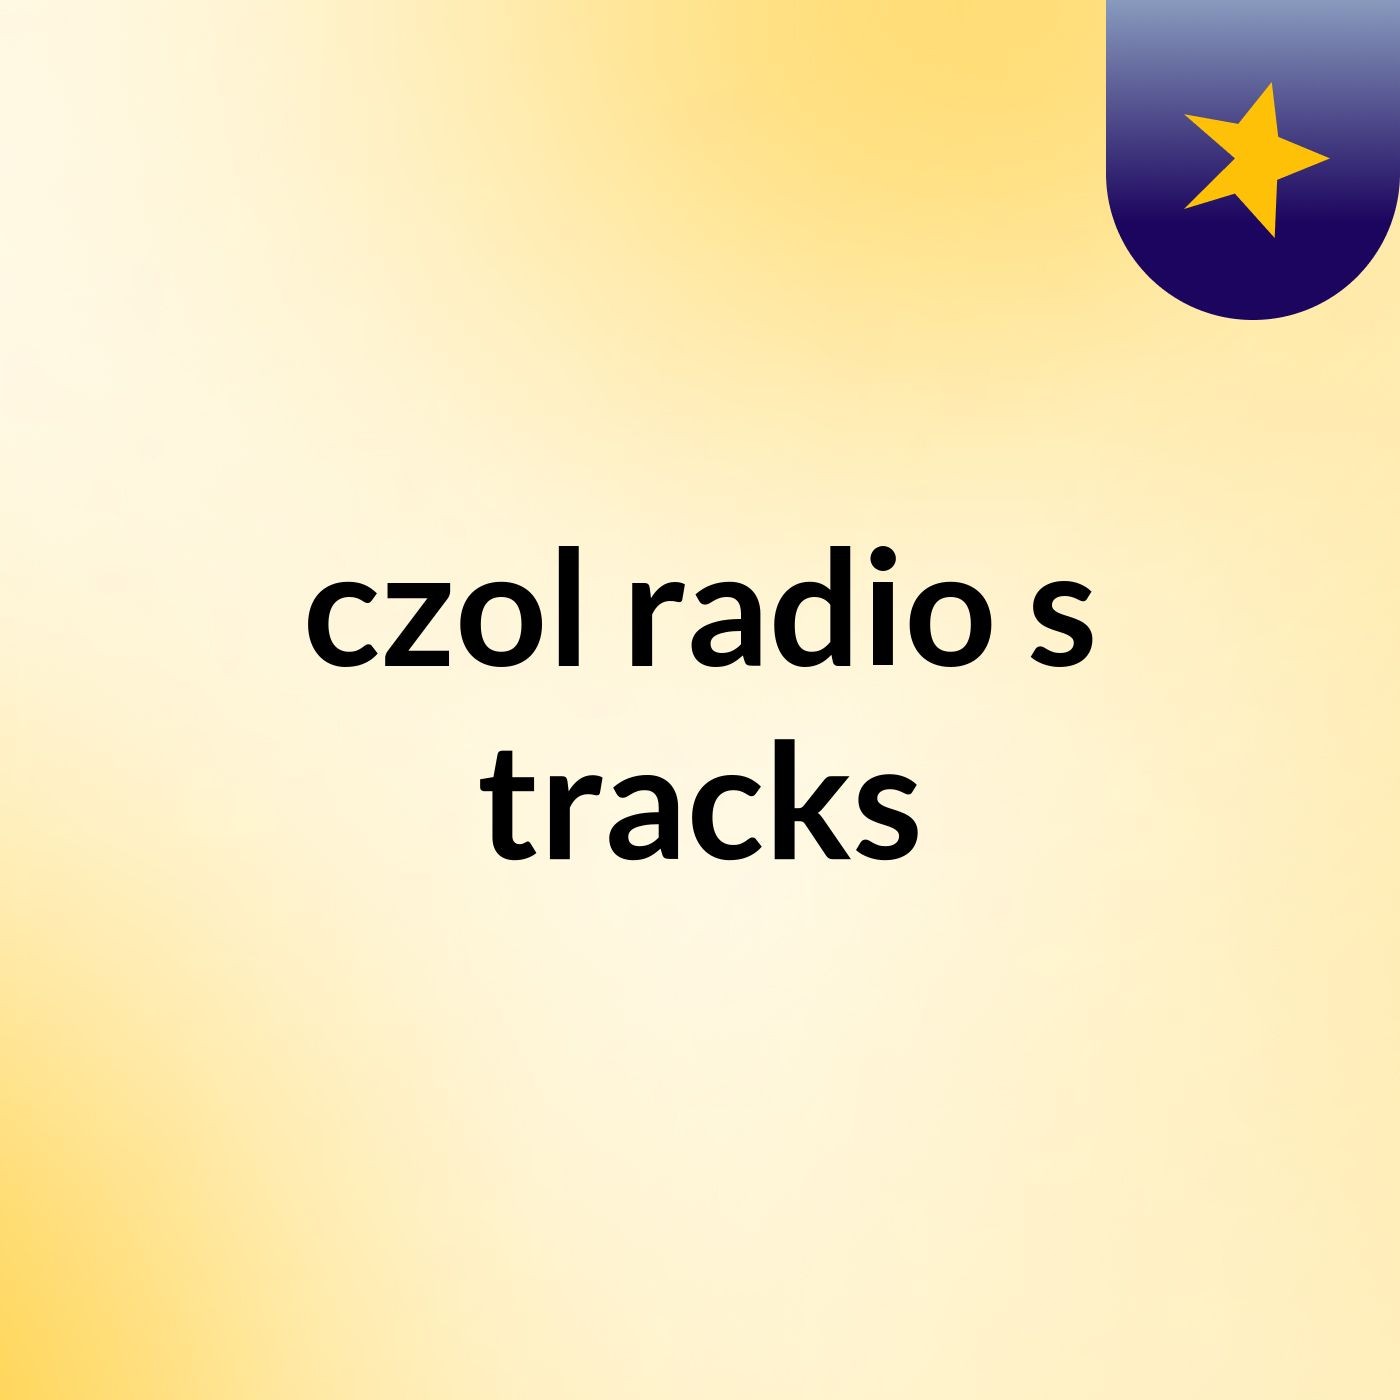 czol radio's tracks